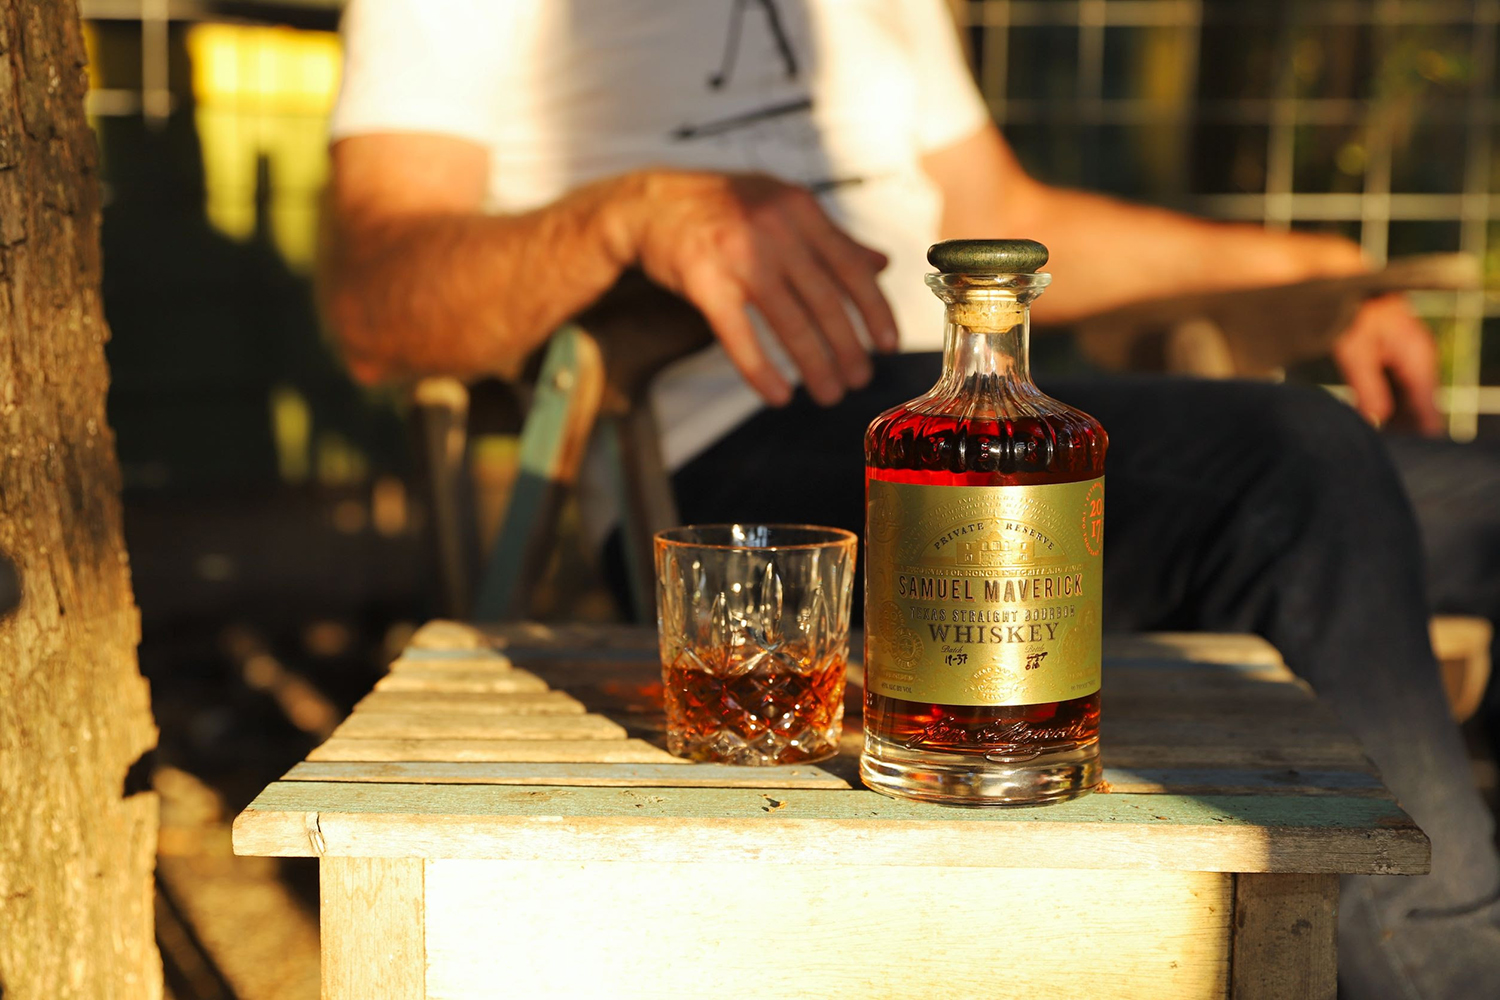 Grand Teton Private Stock Straight Bourbon Whiskey